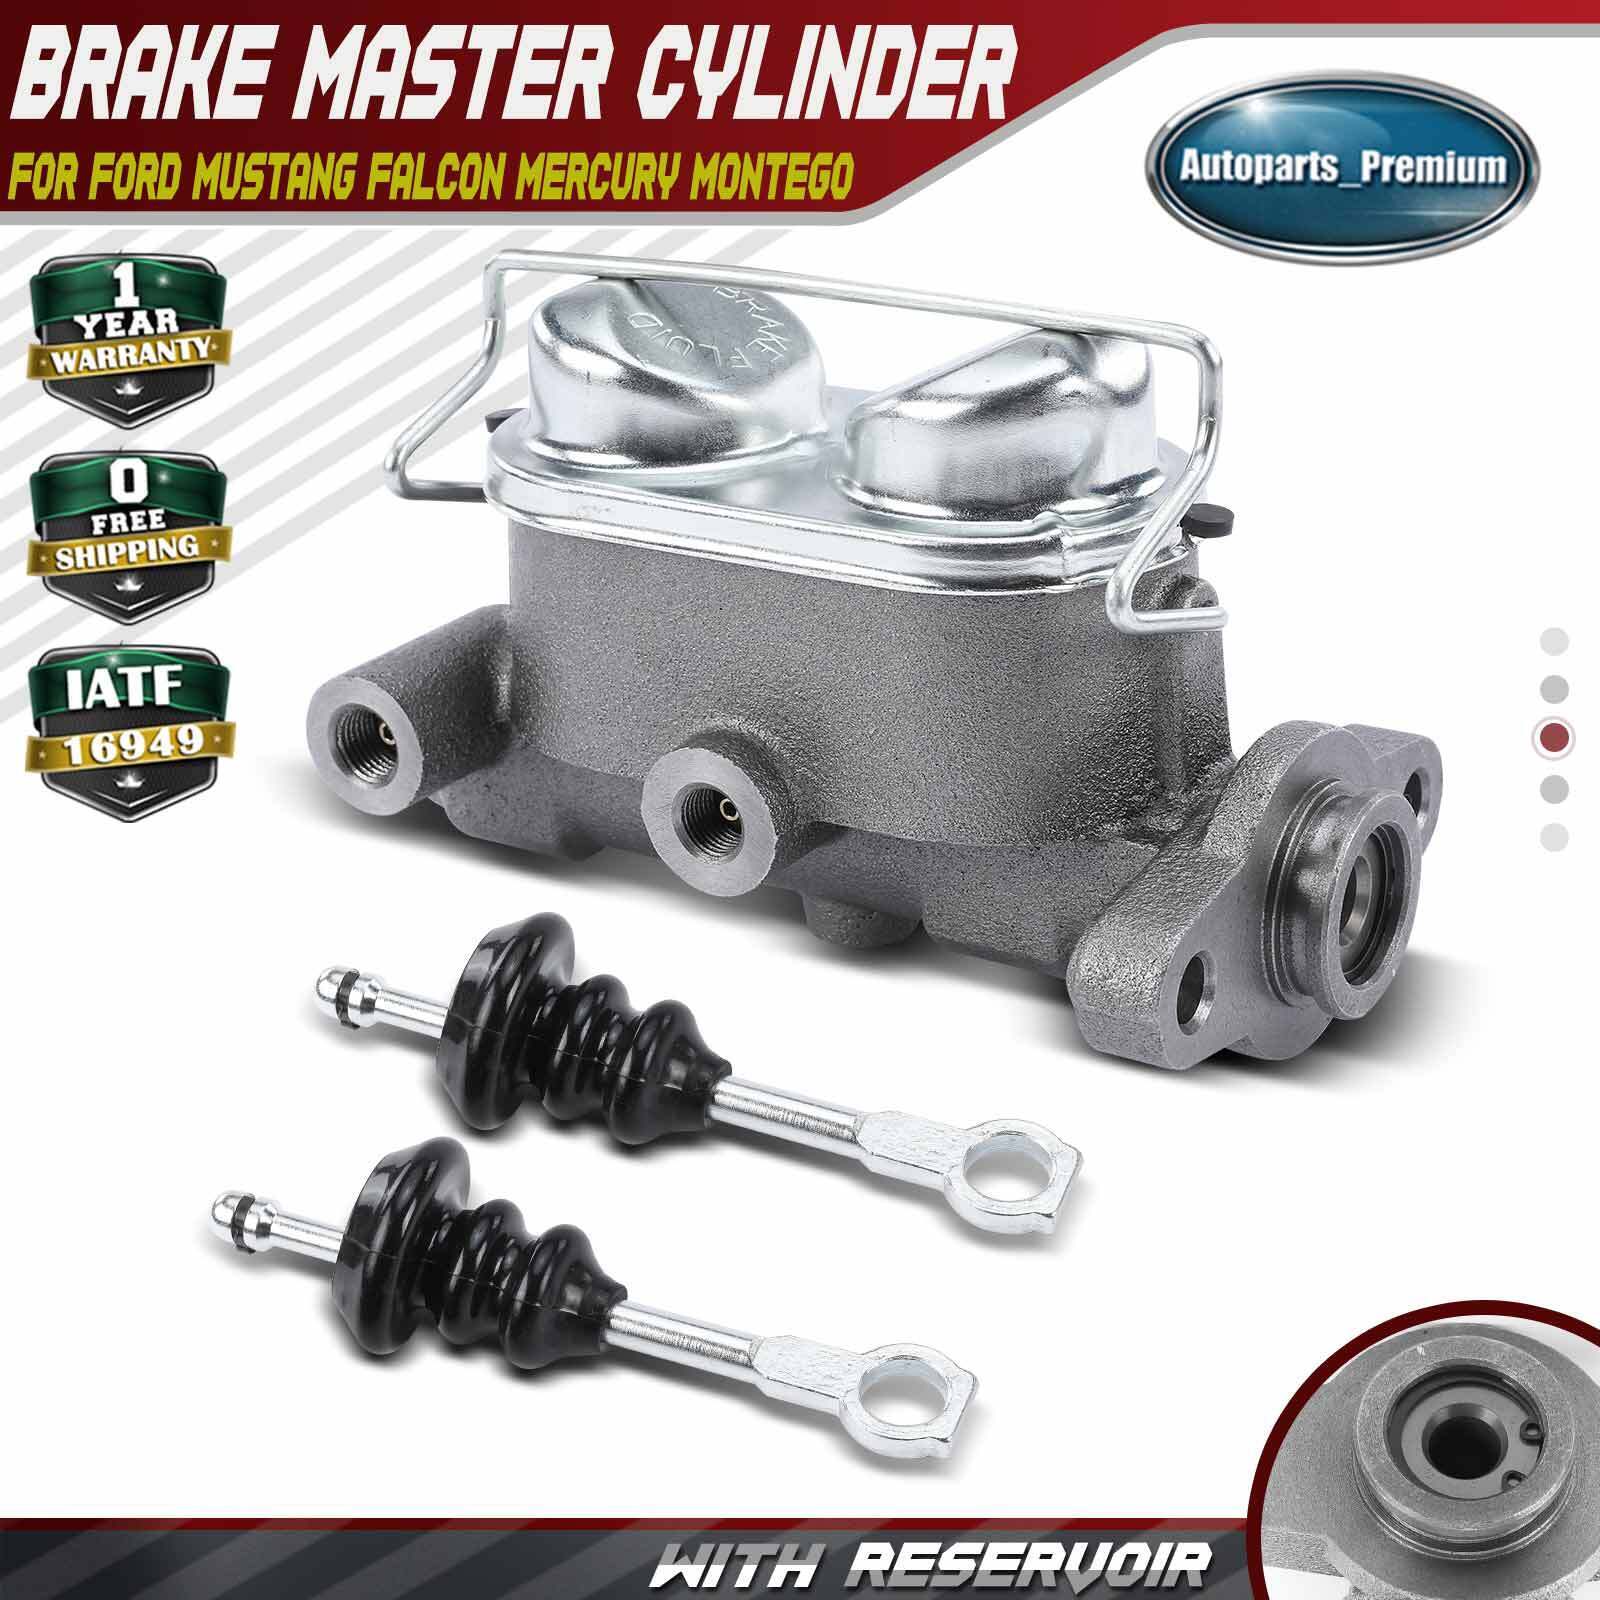 Brake Master Cylinder w/ Reservoir for Ford Mustang Falcon Mercury Capri Comet